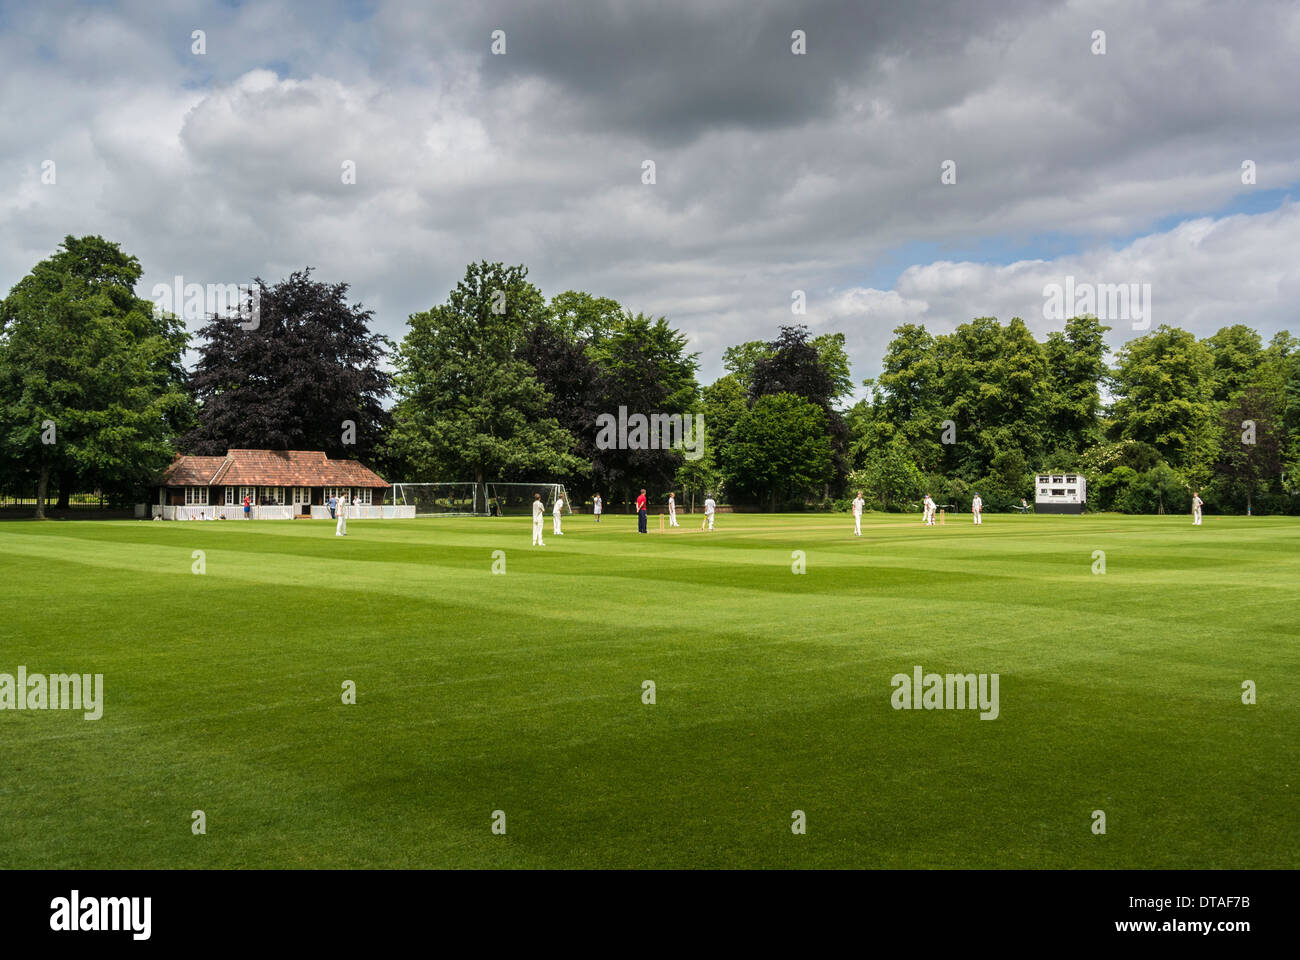 School cricket match in progress Stock Photo